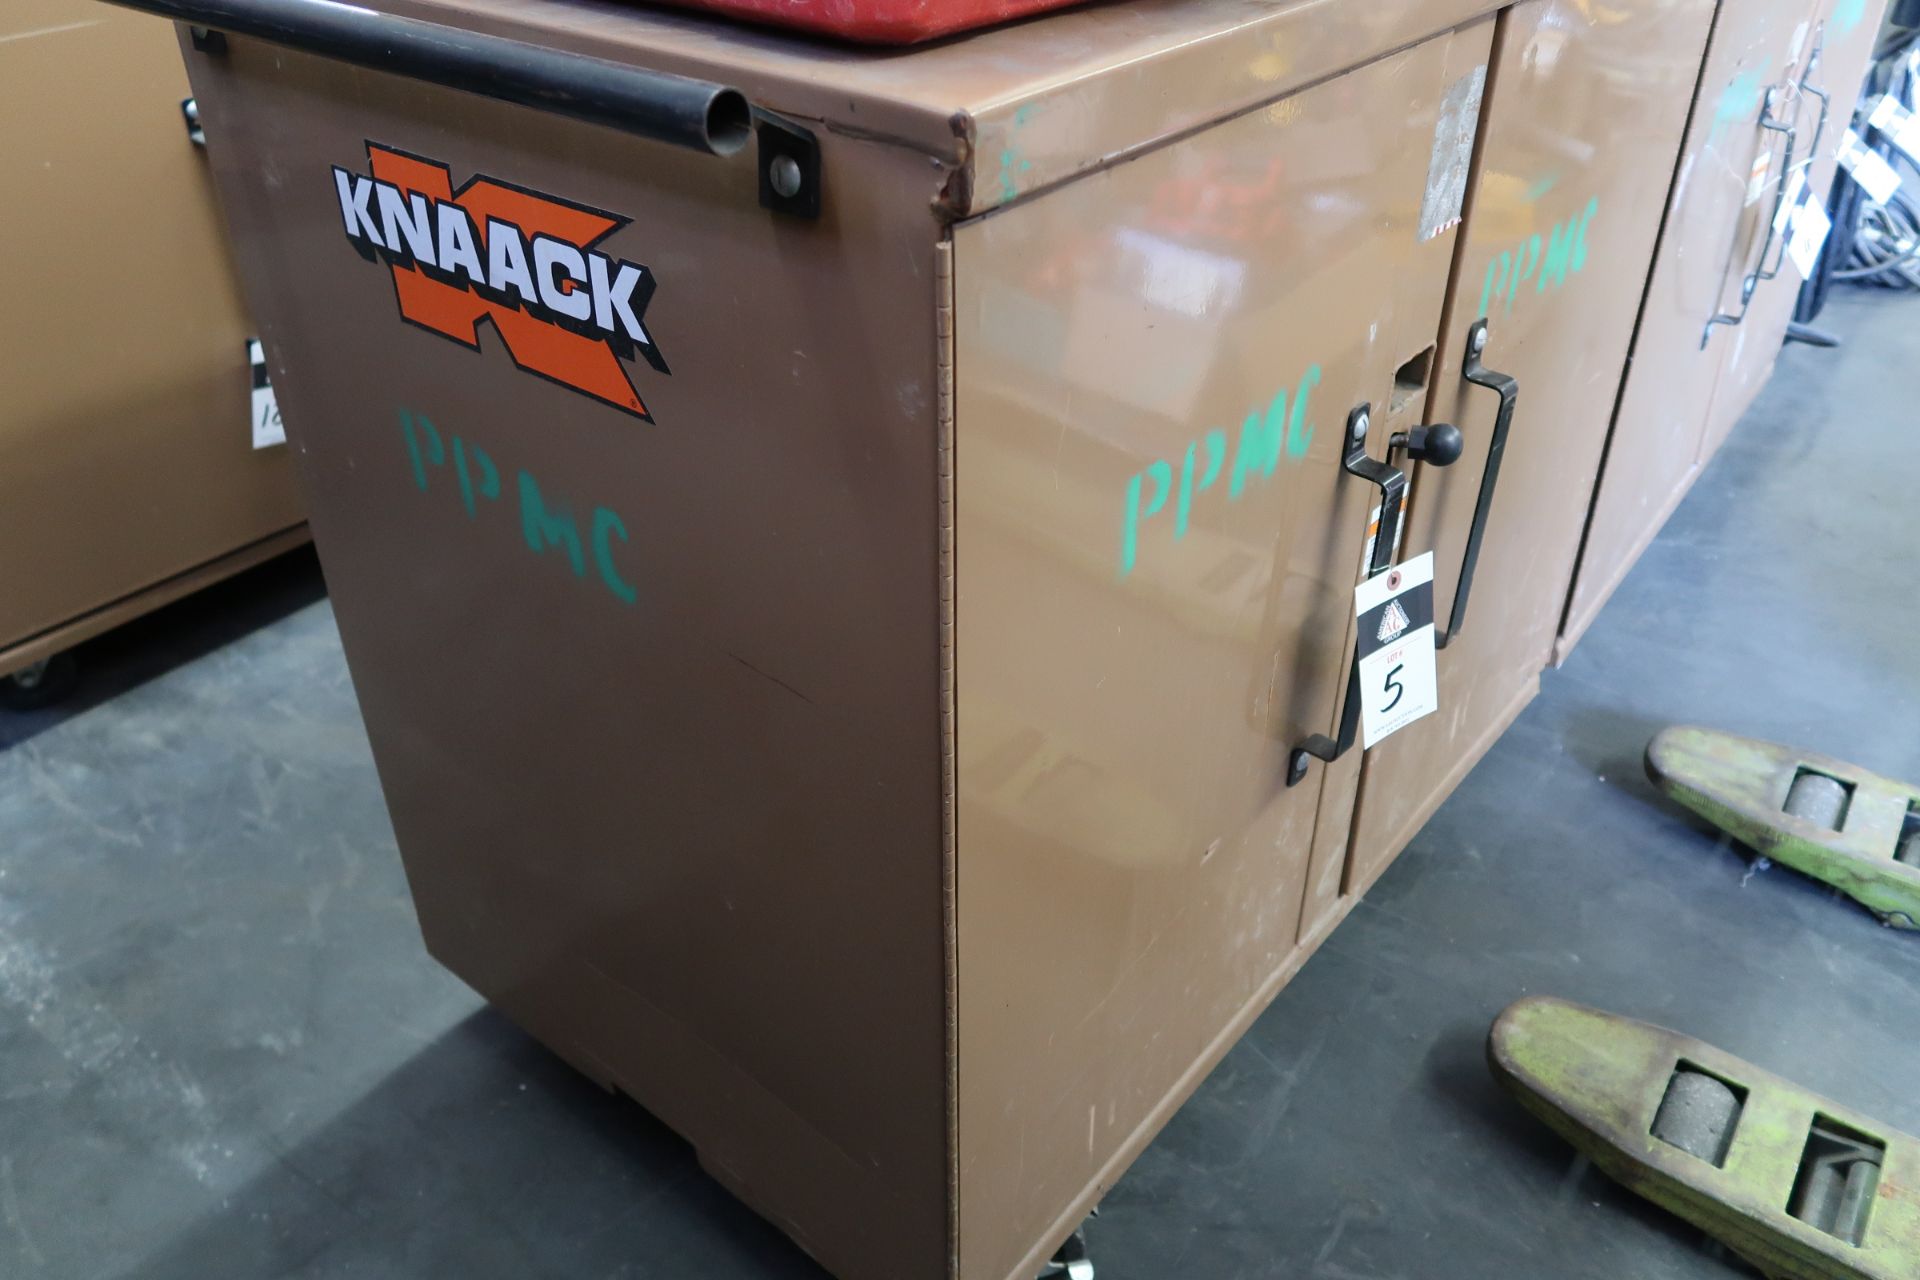 Knaack mdl. 44 Rolling Job Box (SOLD AS-IS - NO WARRANTY) - Image 2 of 4